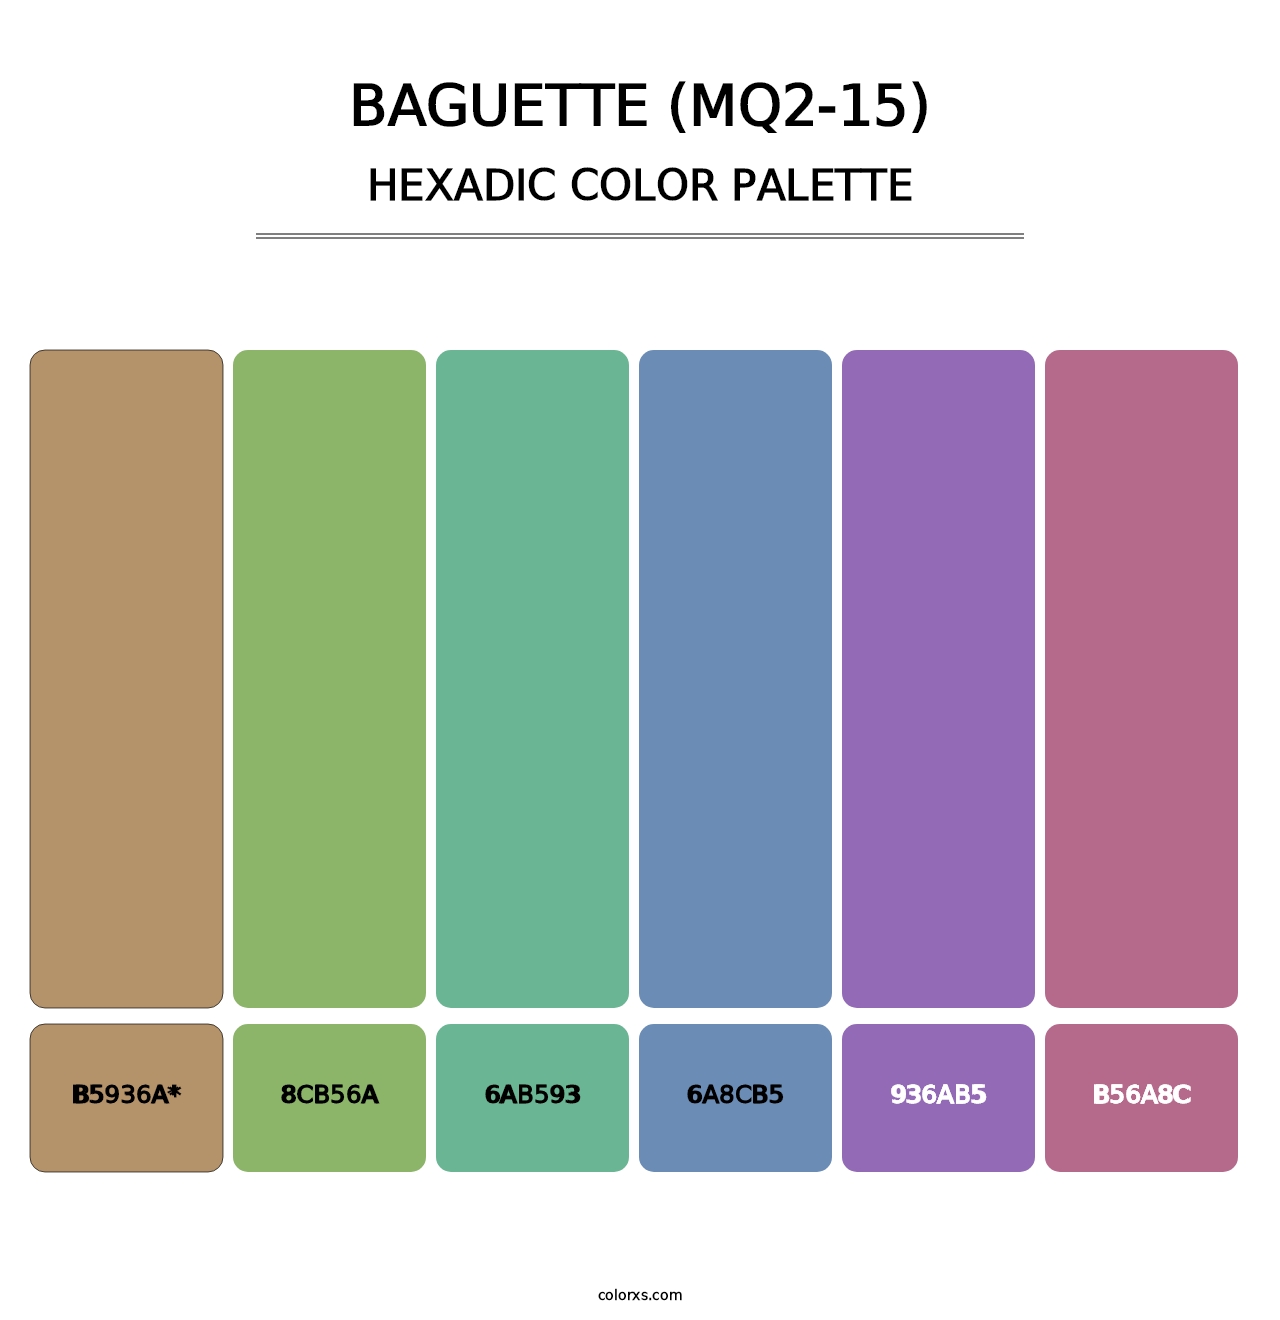 Baguette (MQ2-15) - Hexadic Color Palette